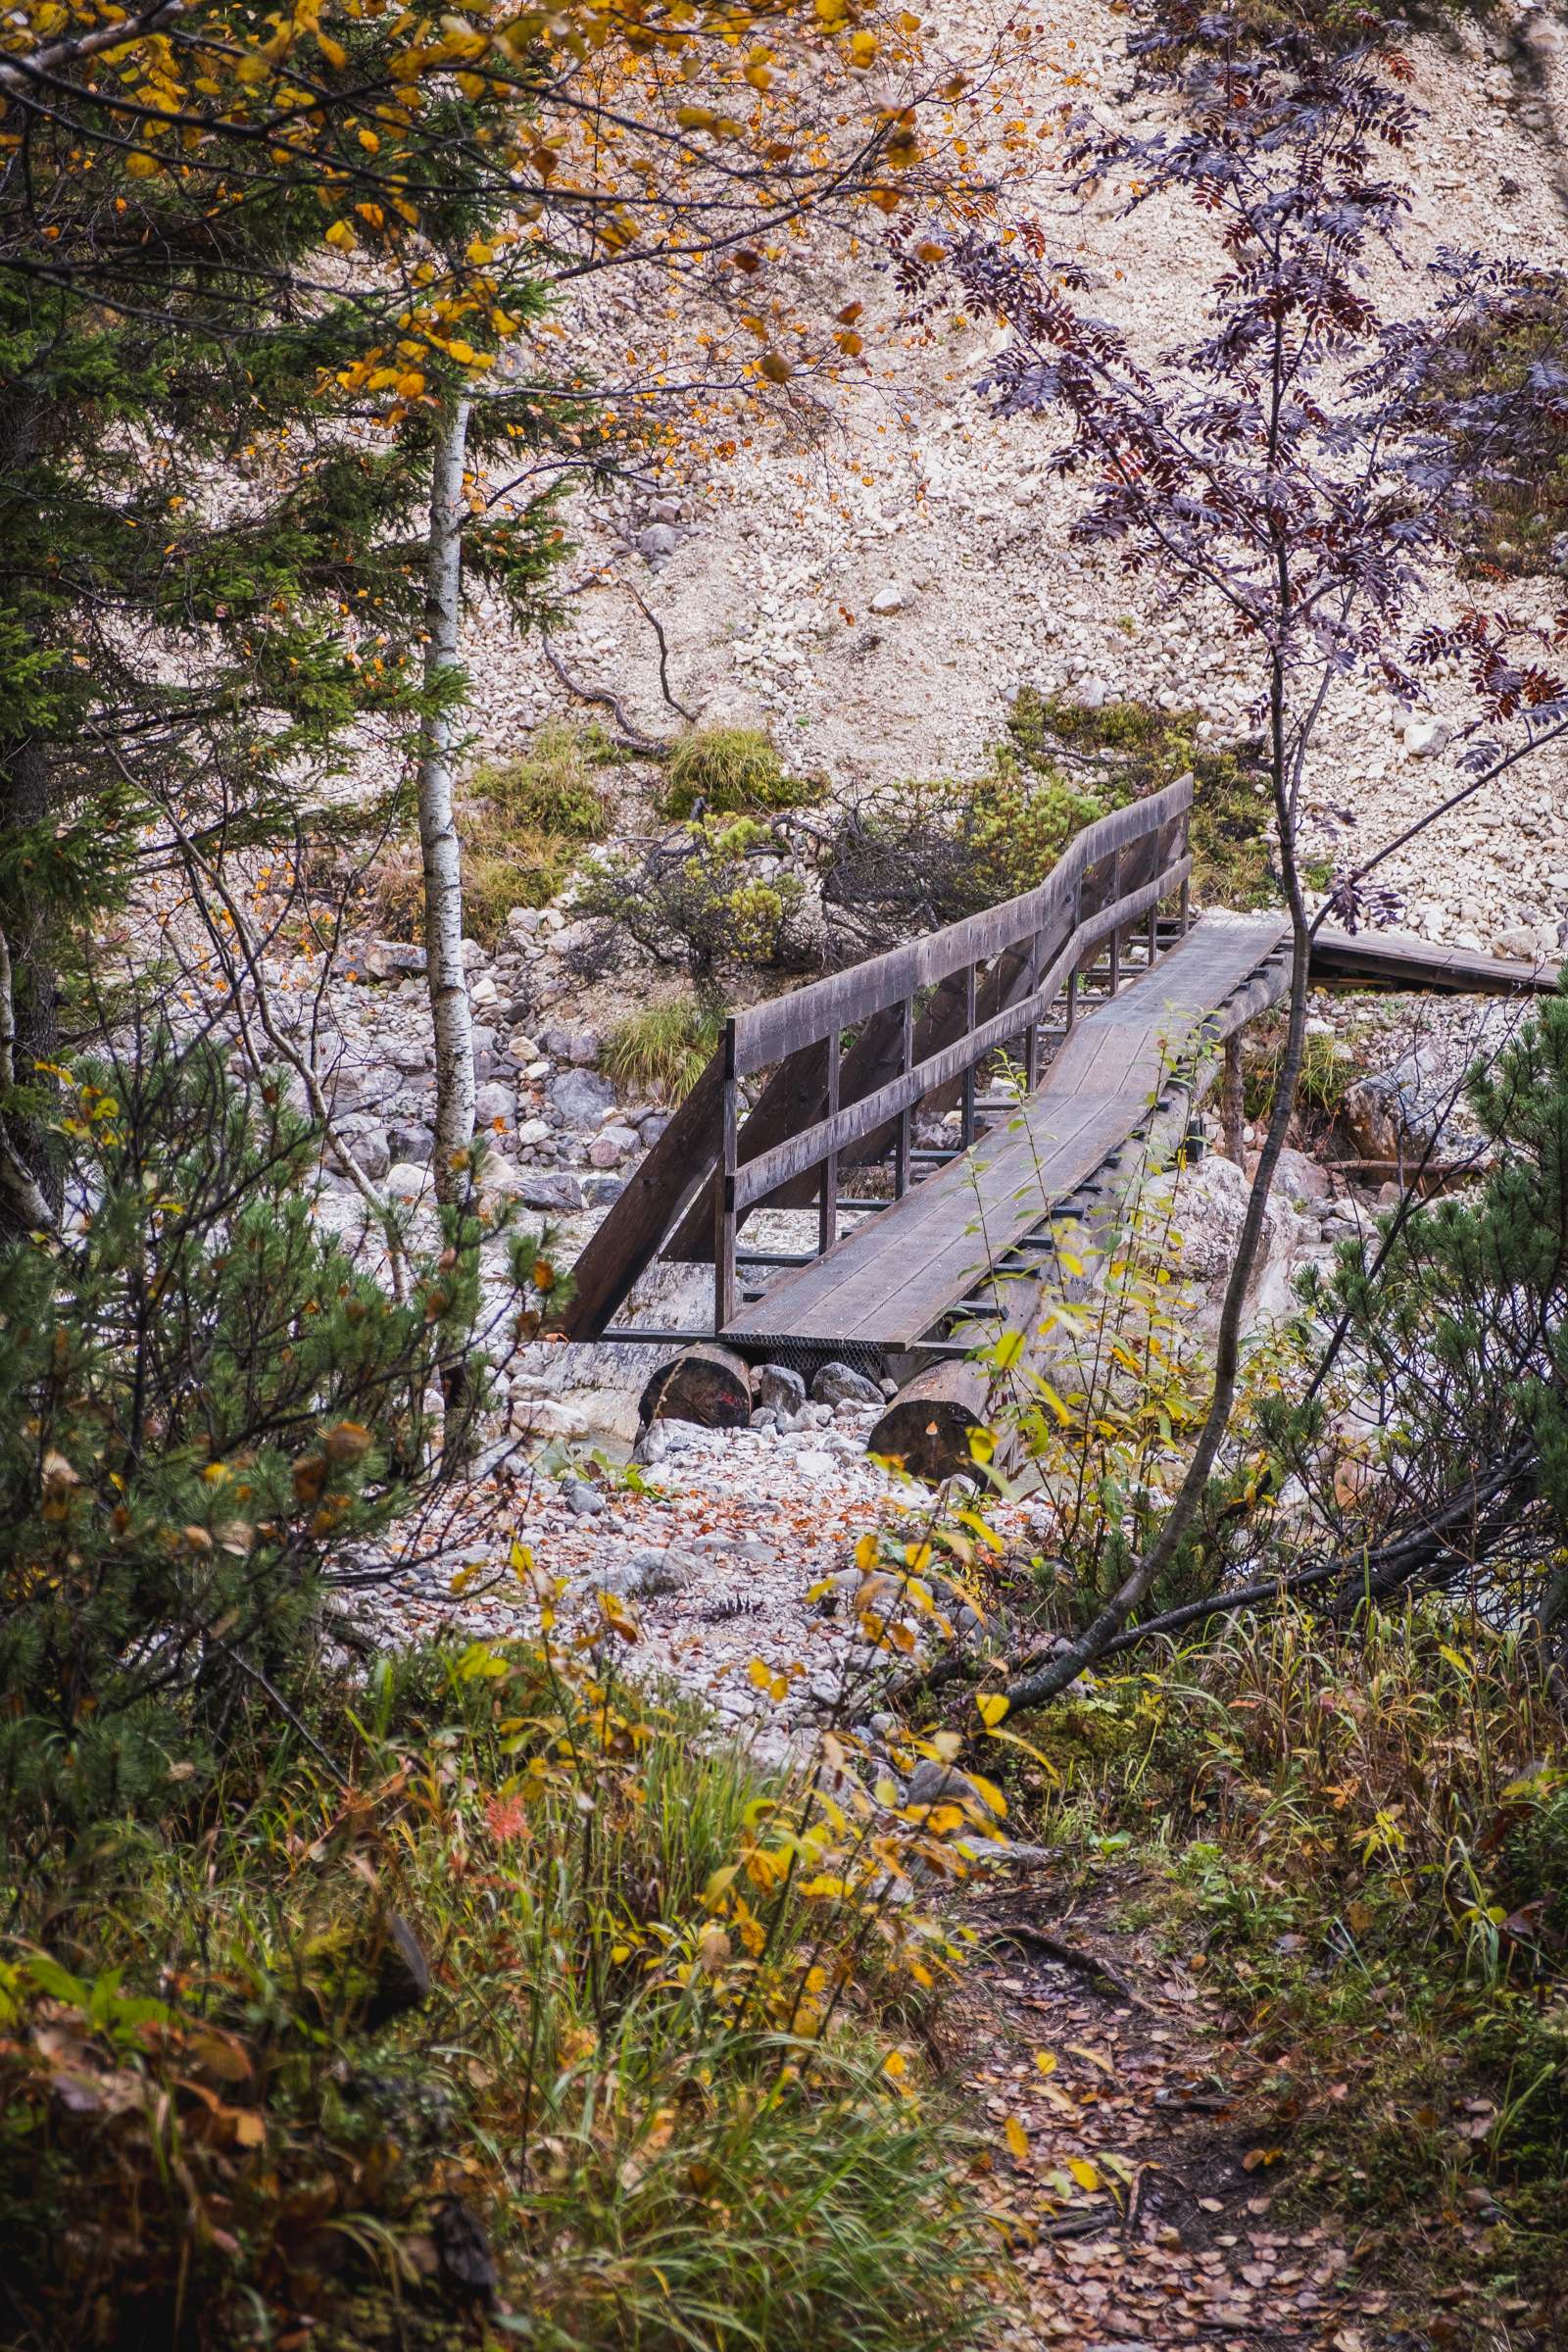 A cute wooden bridge crossing the stream